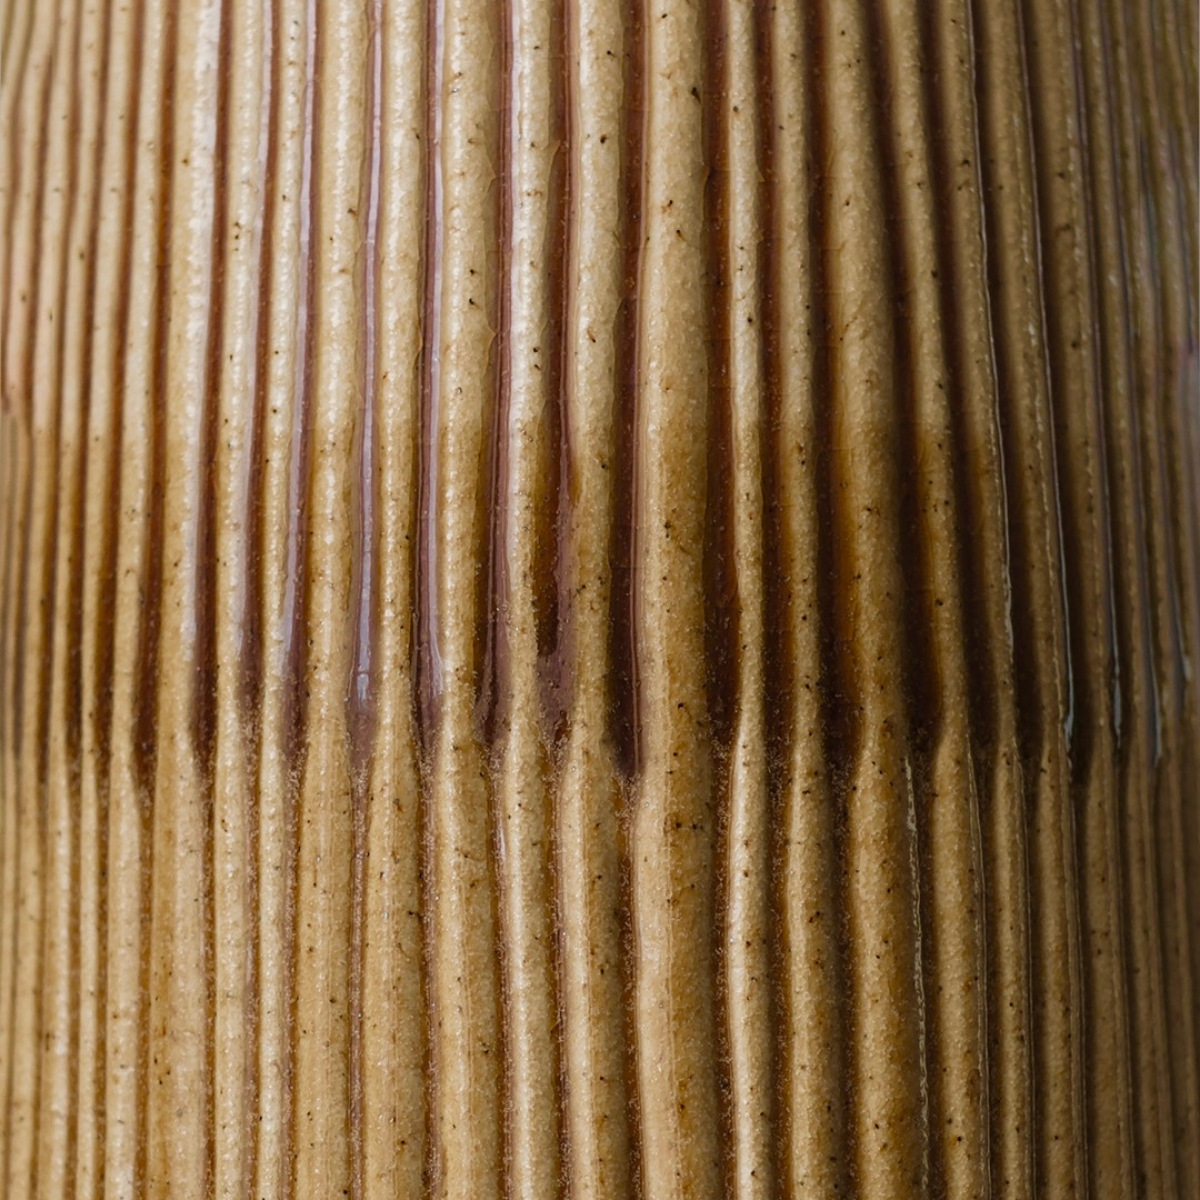 Vase Organic Grand Format